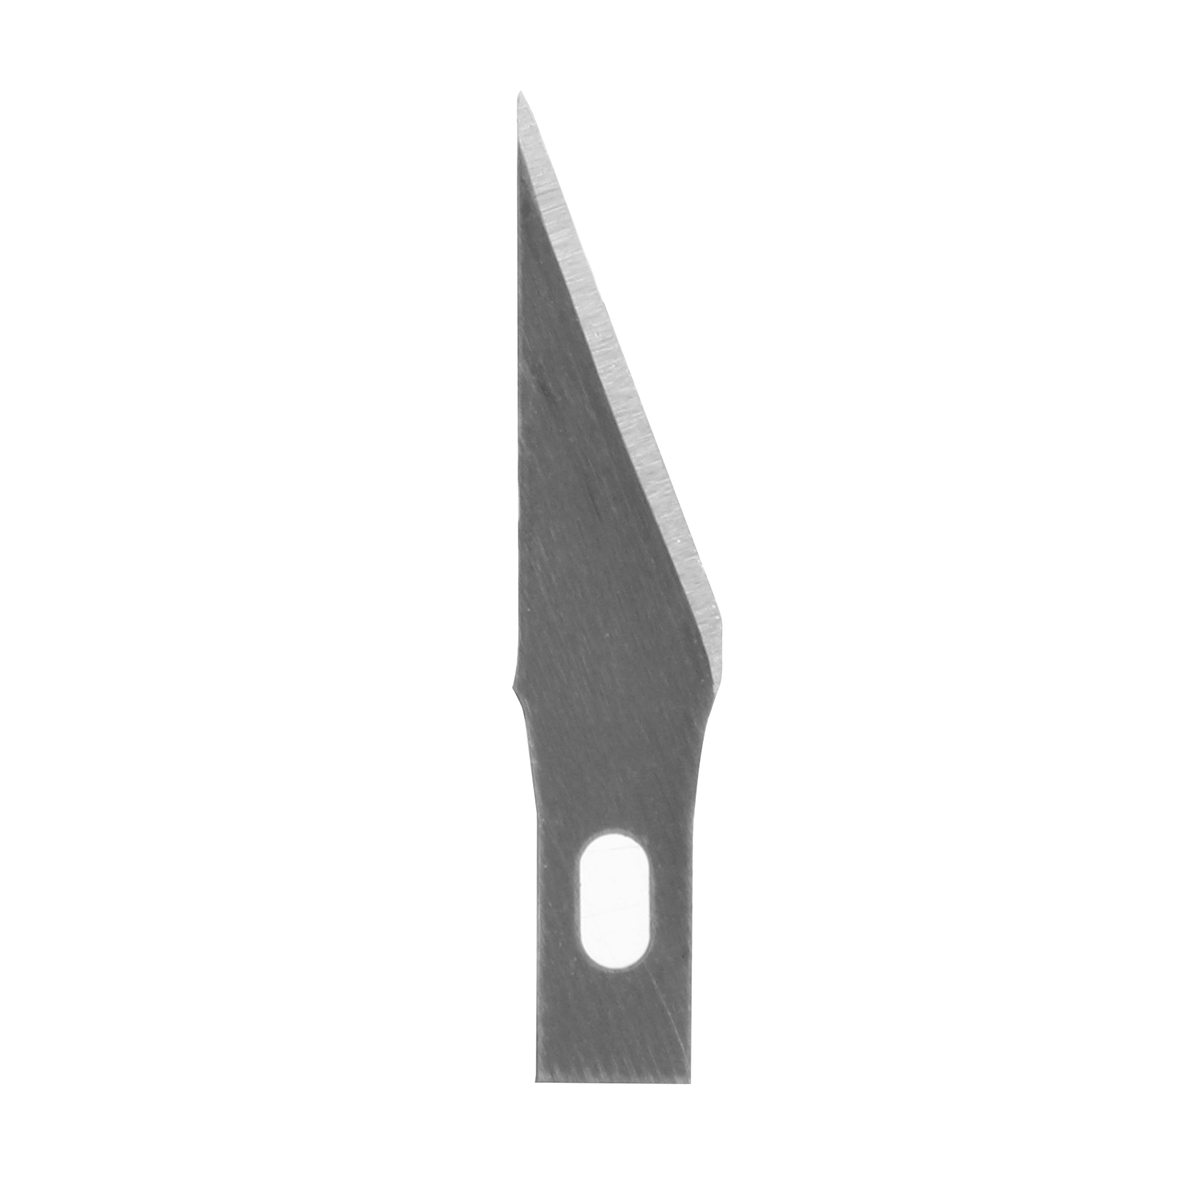 Modeler-Basic-Tools-Craft-Set-For-Hobby-Model-Building-Tools-Kit-Grinding-1345352